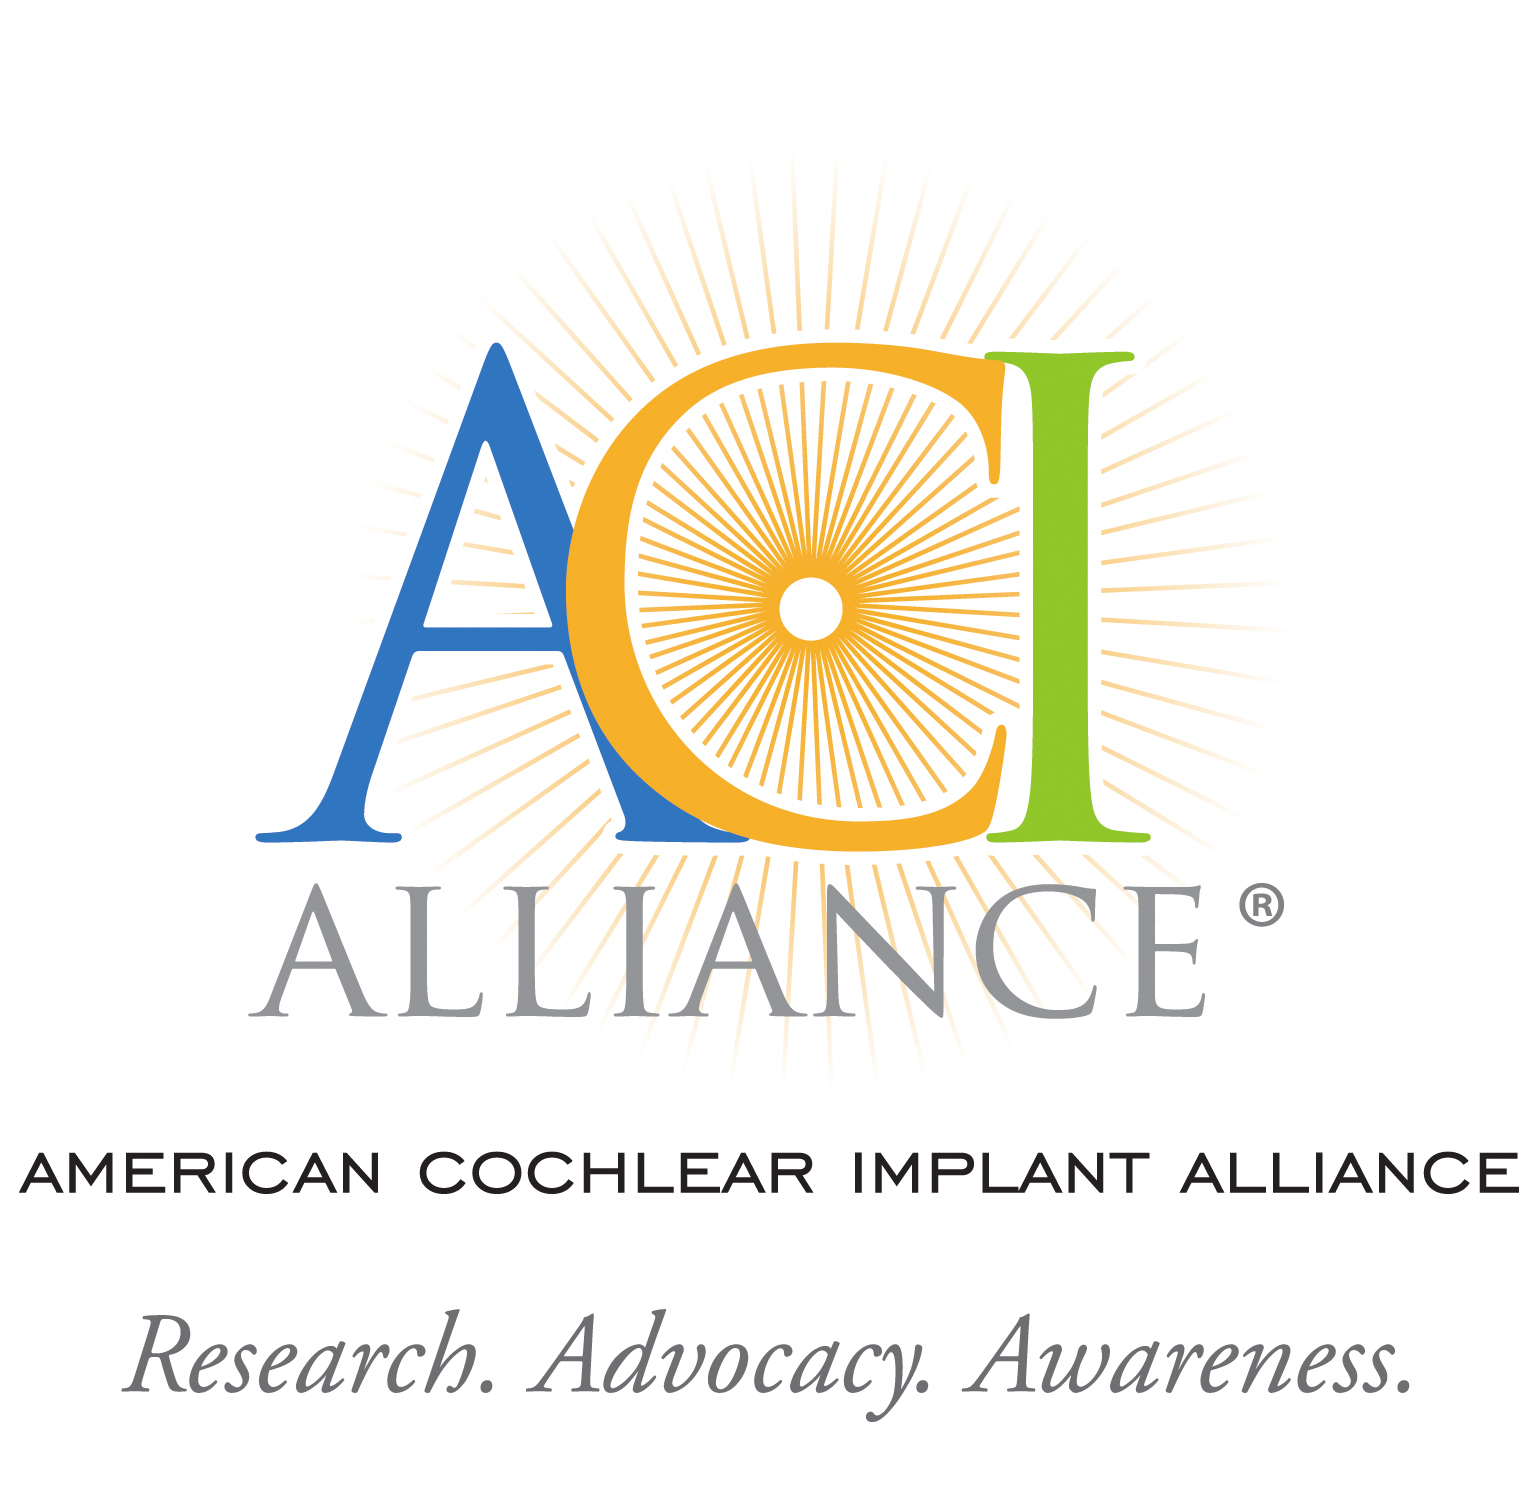 ACI Alliance logo